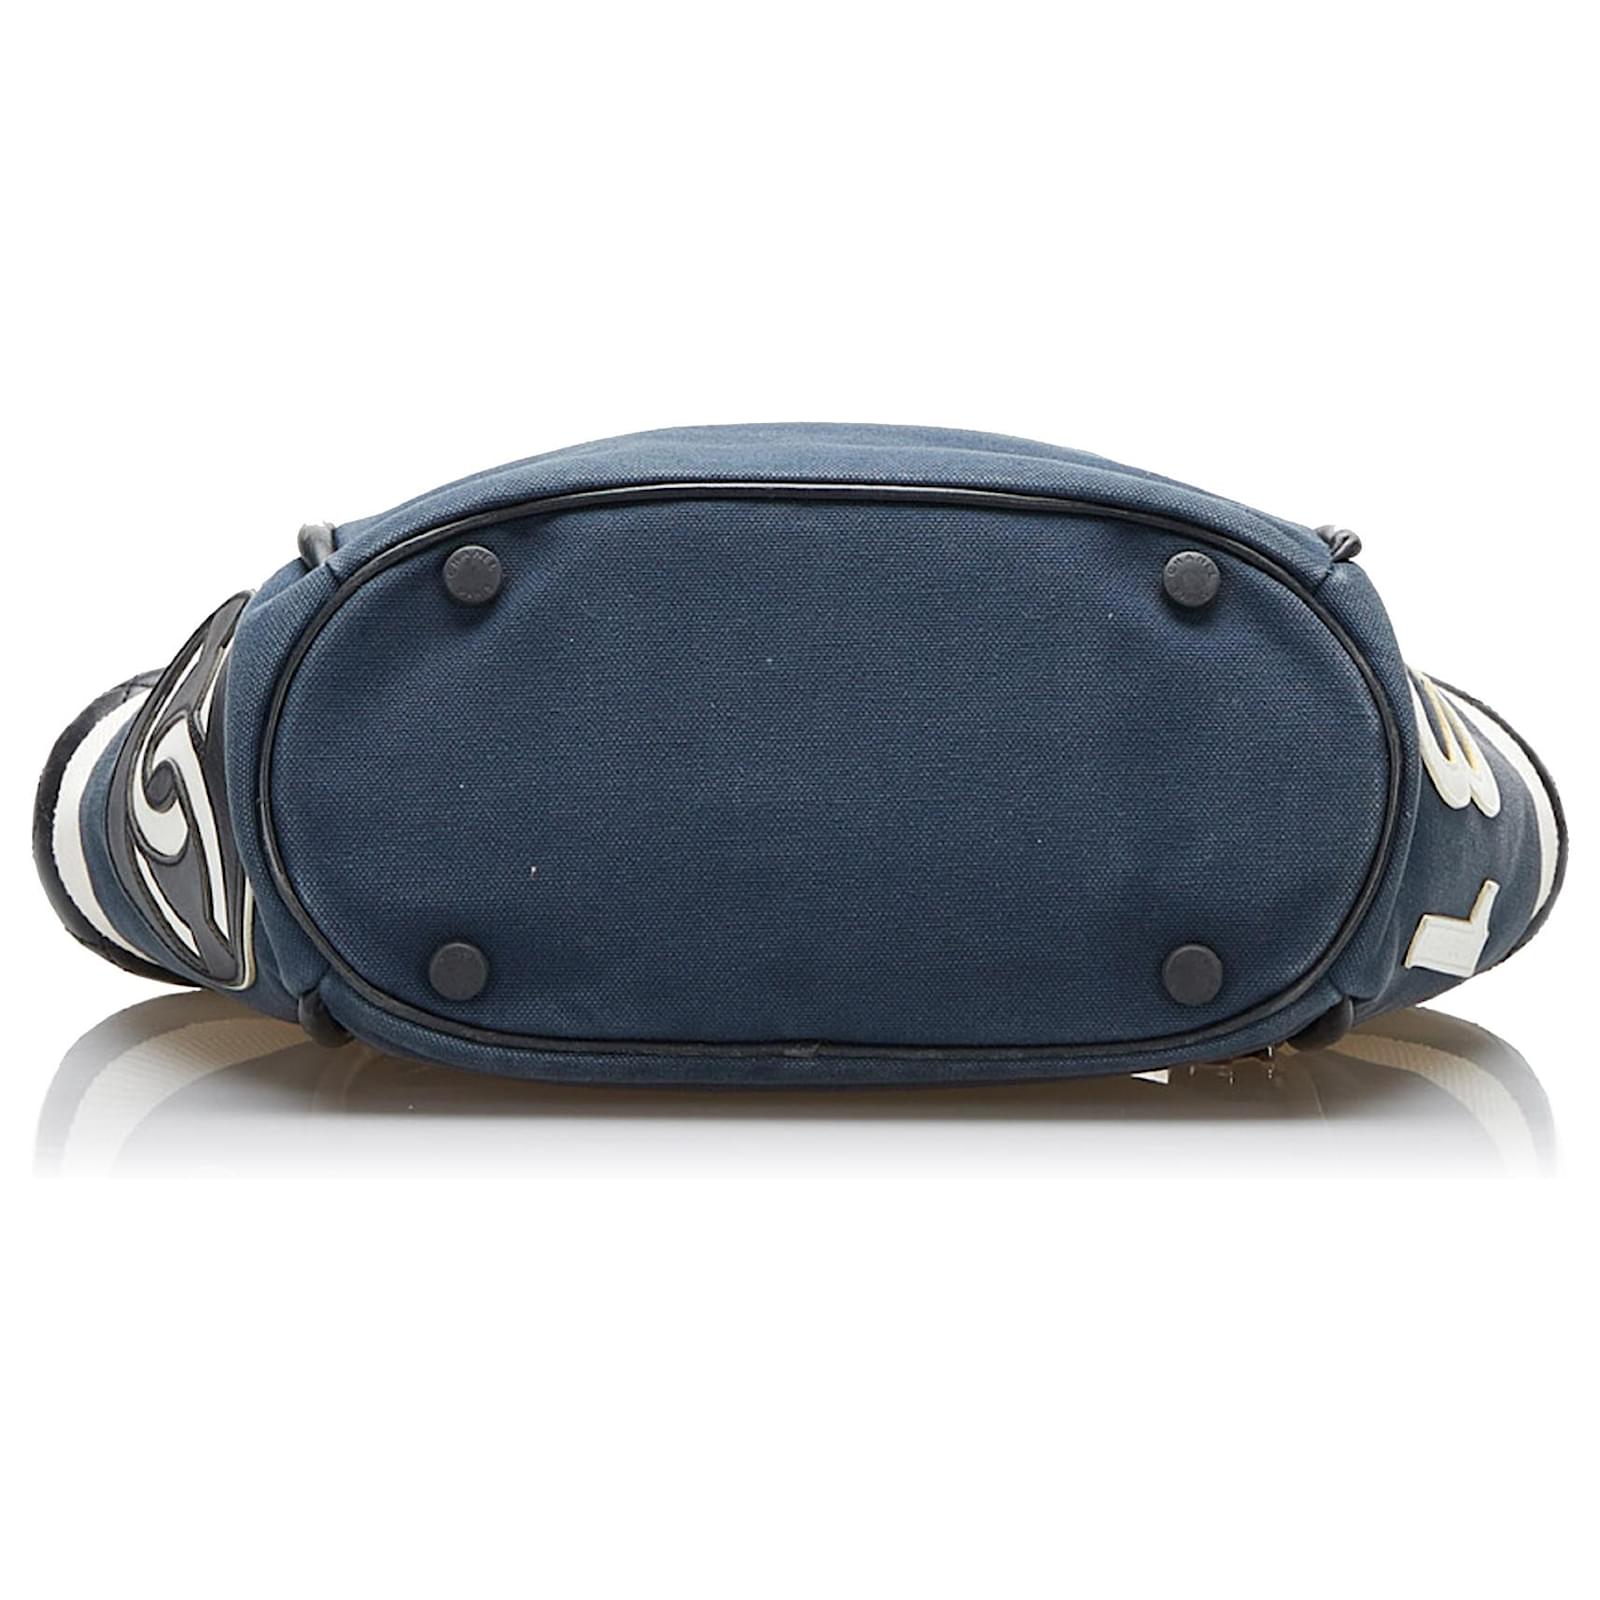 CHANEL Blue Nylon Exterior Bags & Handbags for Women